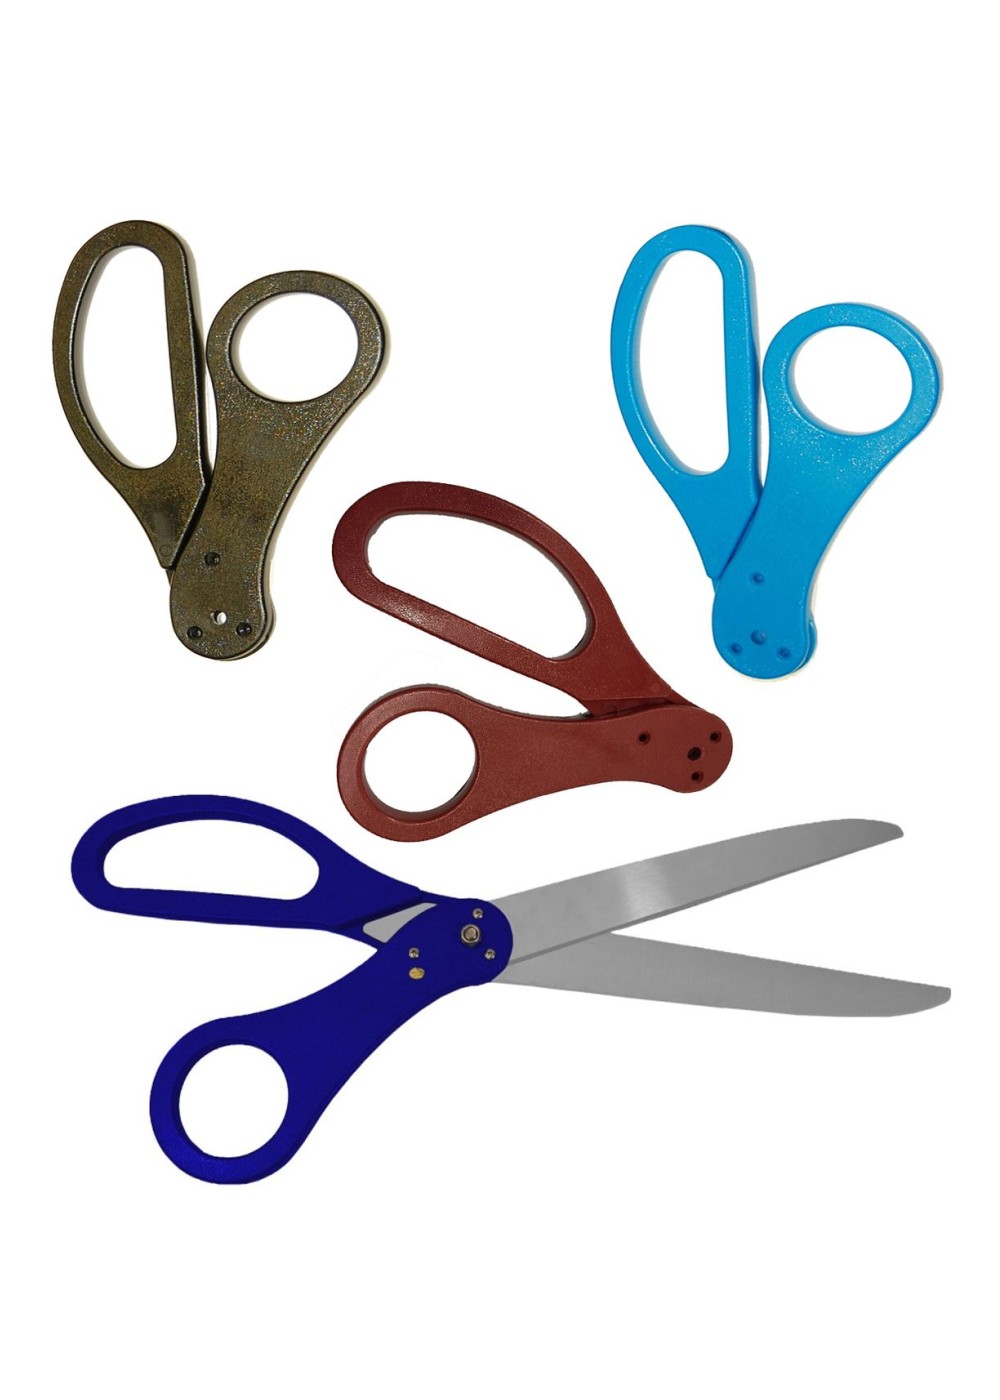  Ribbon Cutting Scissors by Wonder Scissors One Size